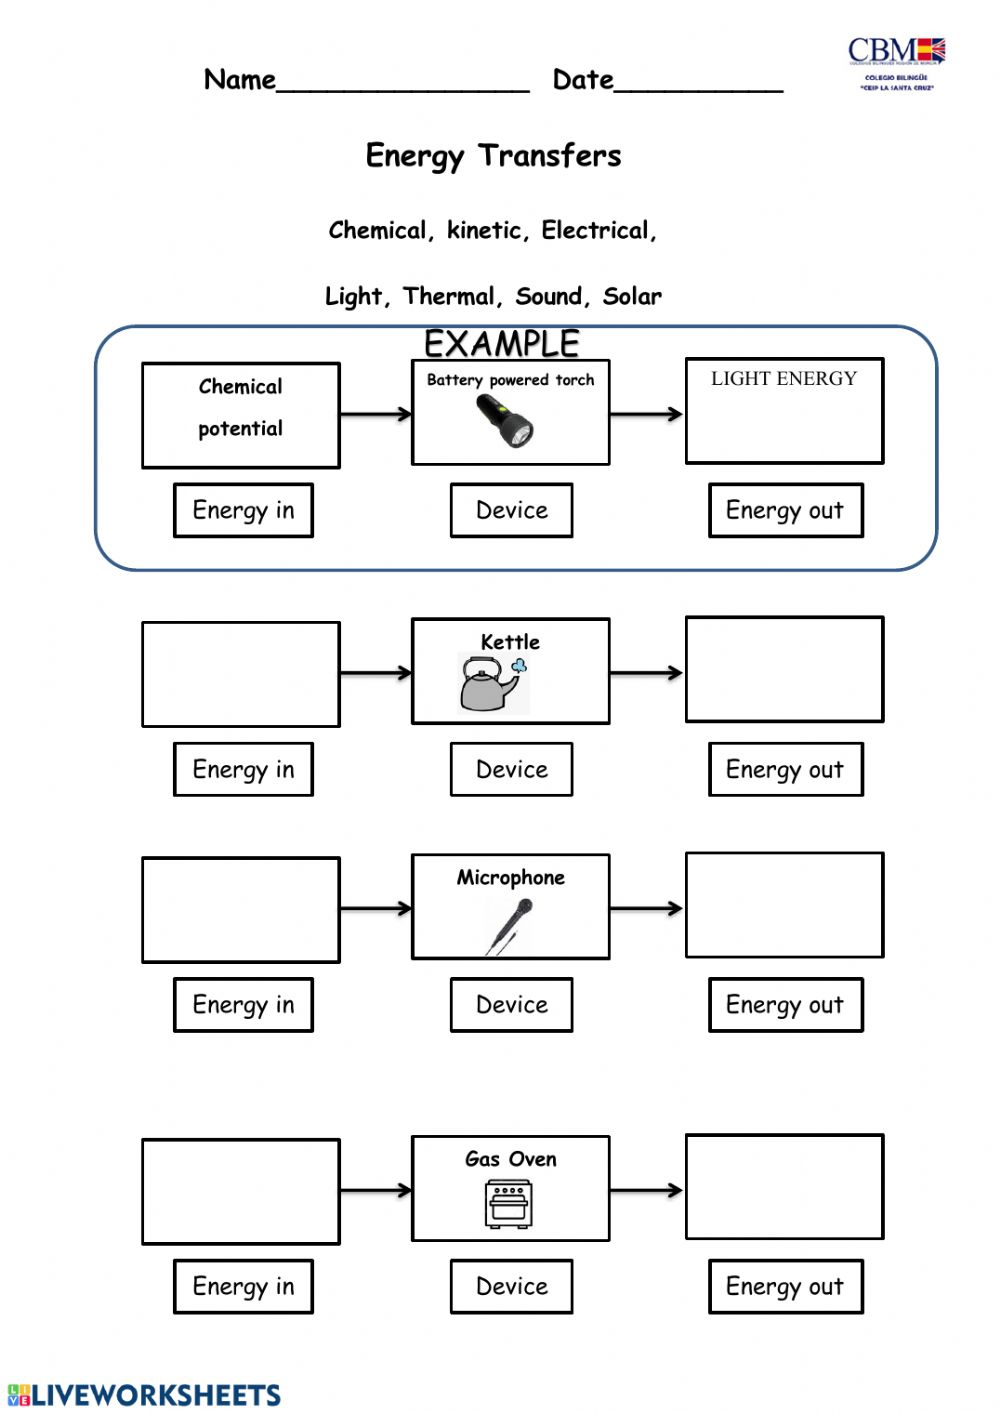 Energy Transformation Worksheet